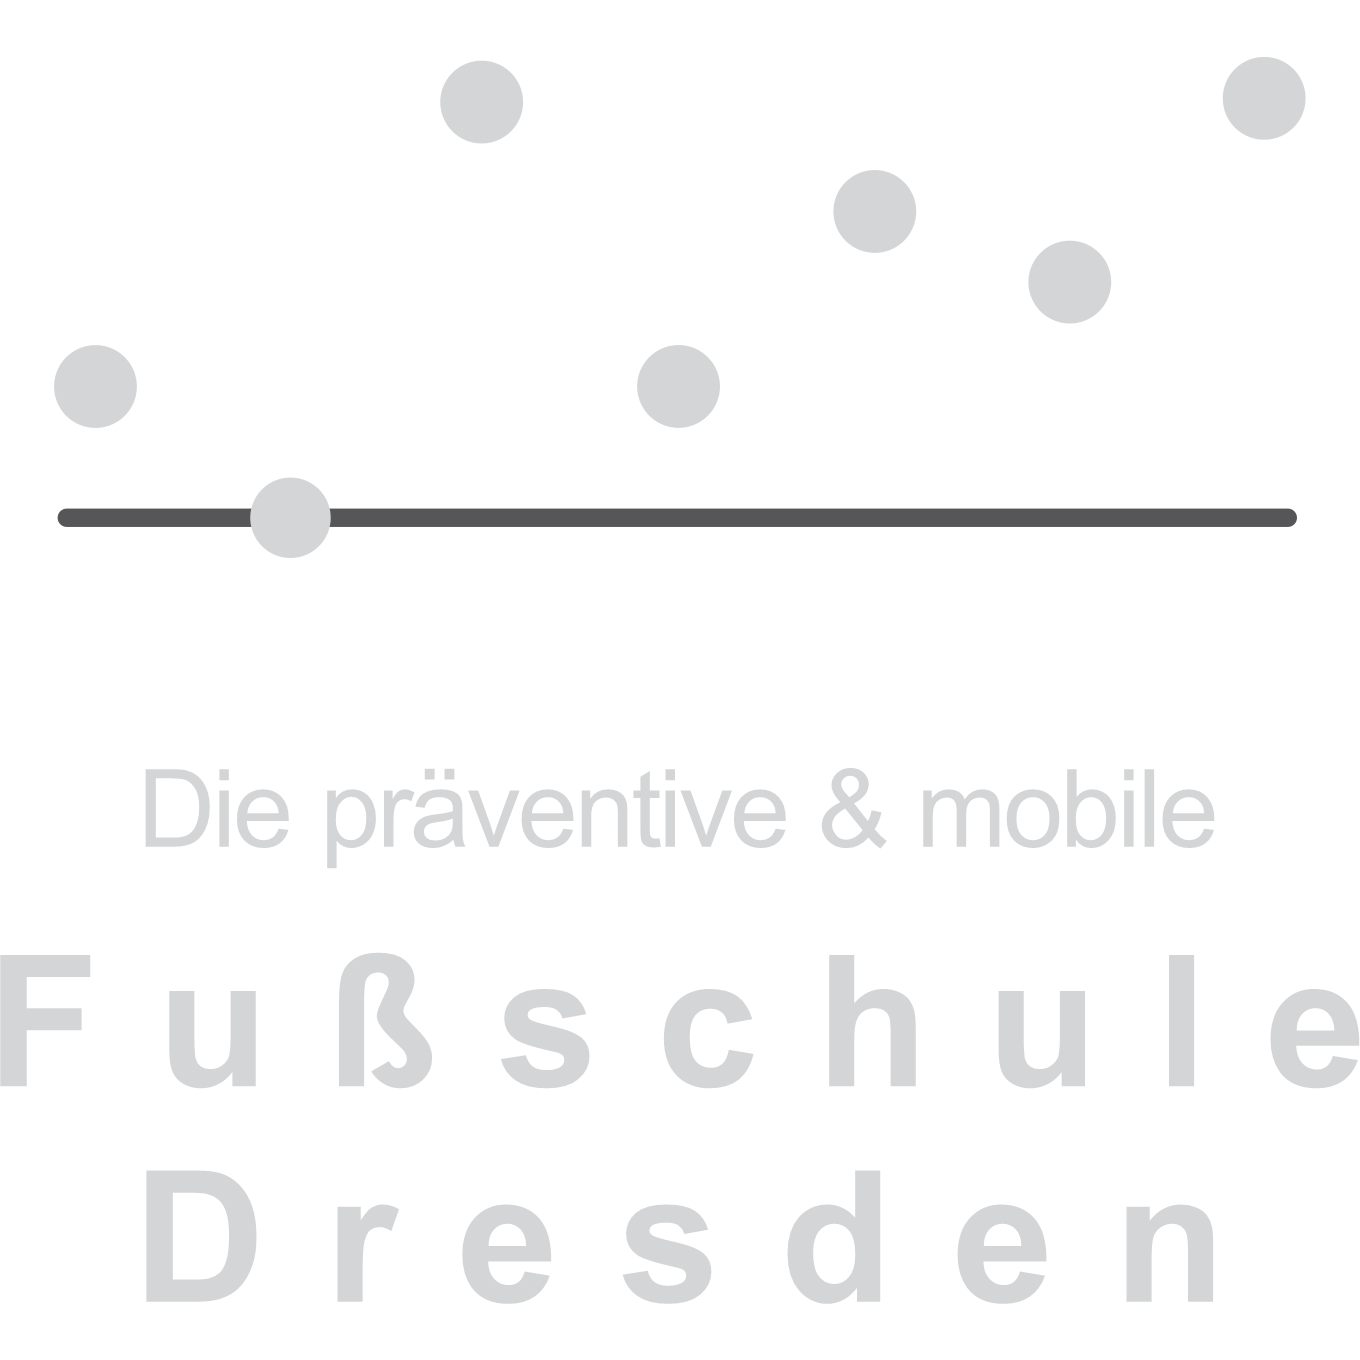 Logo Fußschule Dresden